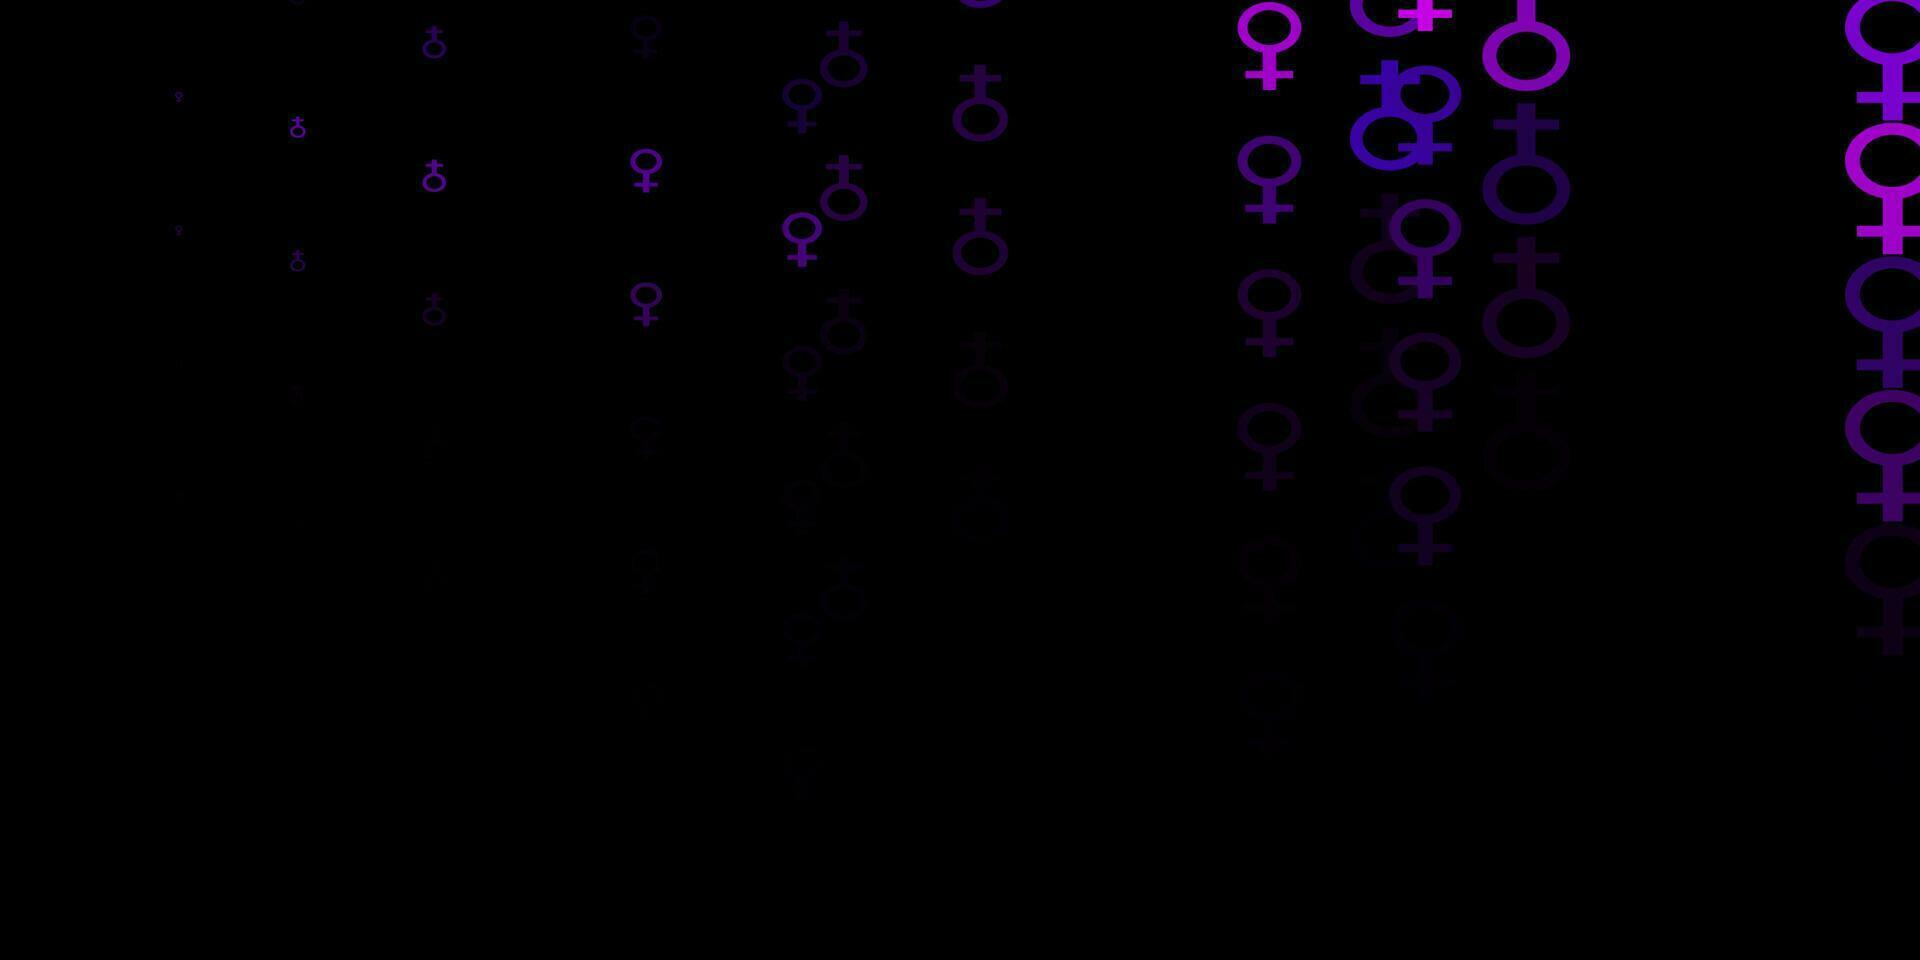 Dark Purple vector texture with women's rights symbols.